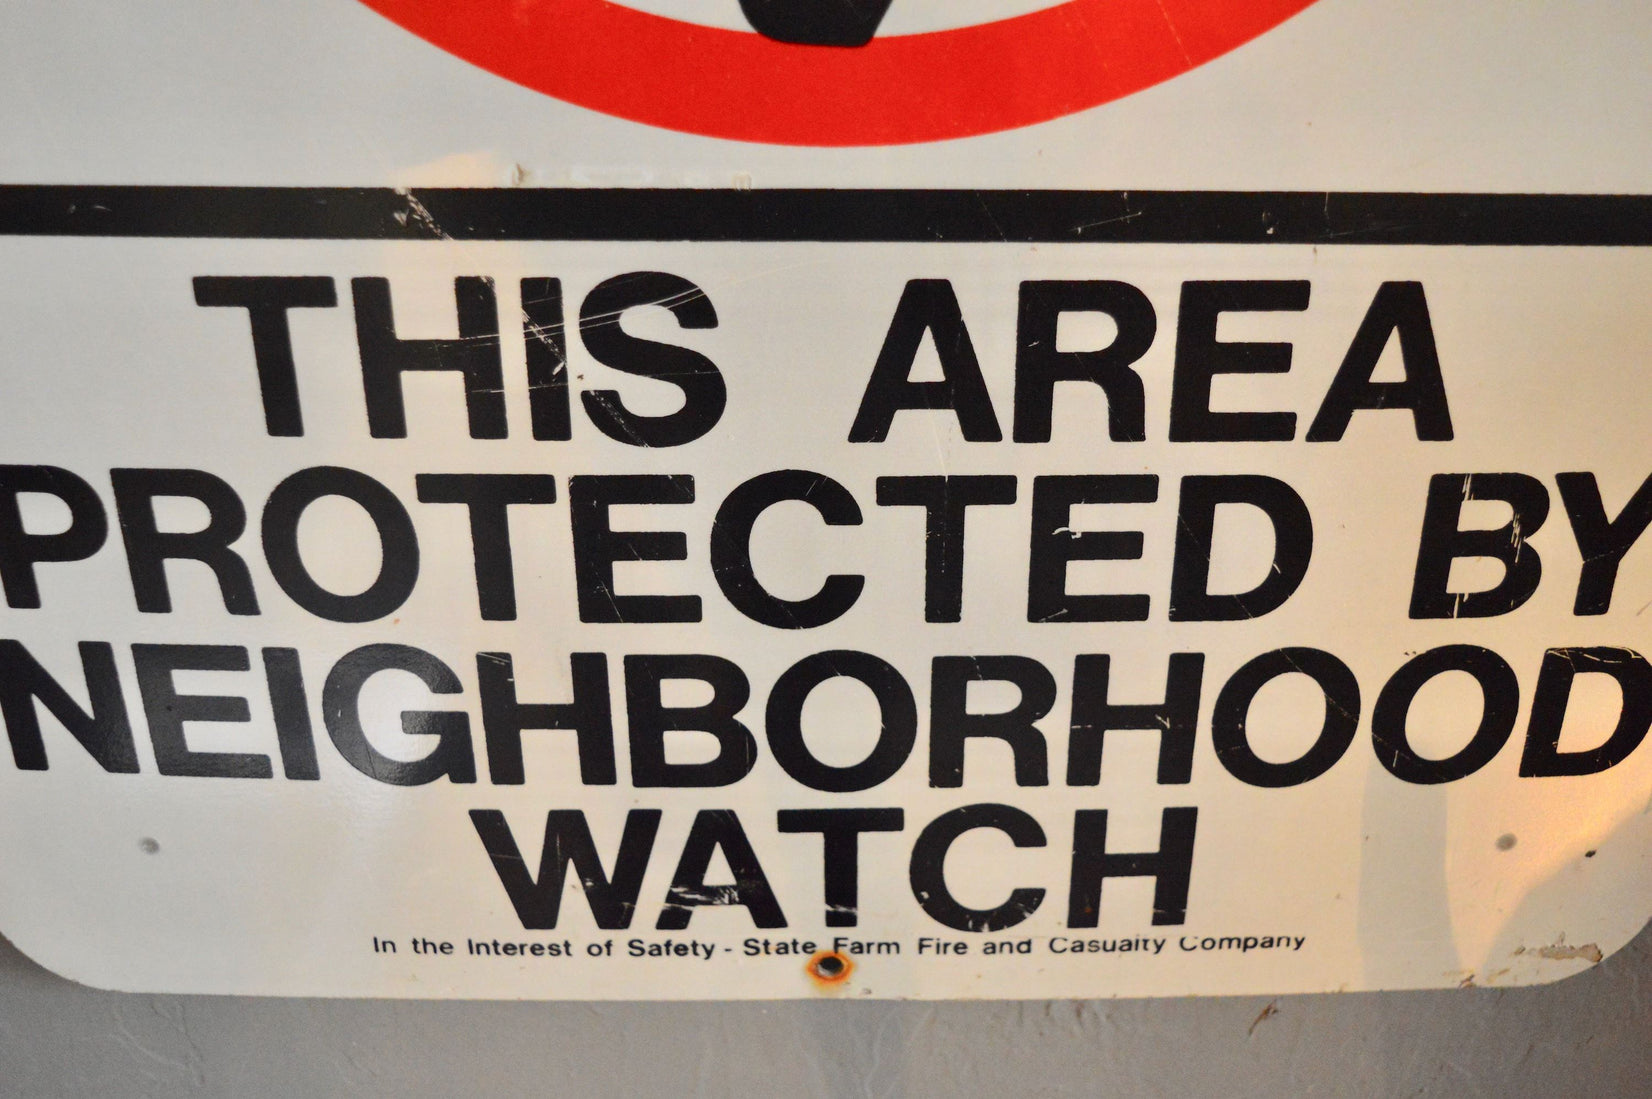 Vintage Neighborhood Watch Sign